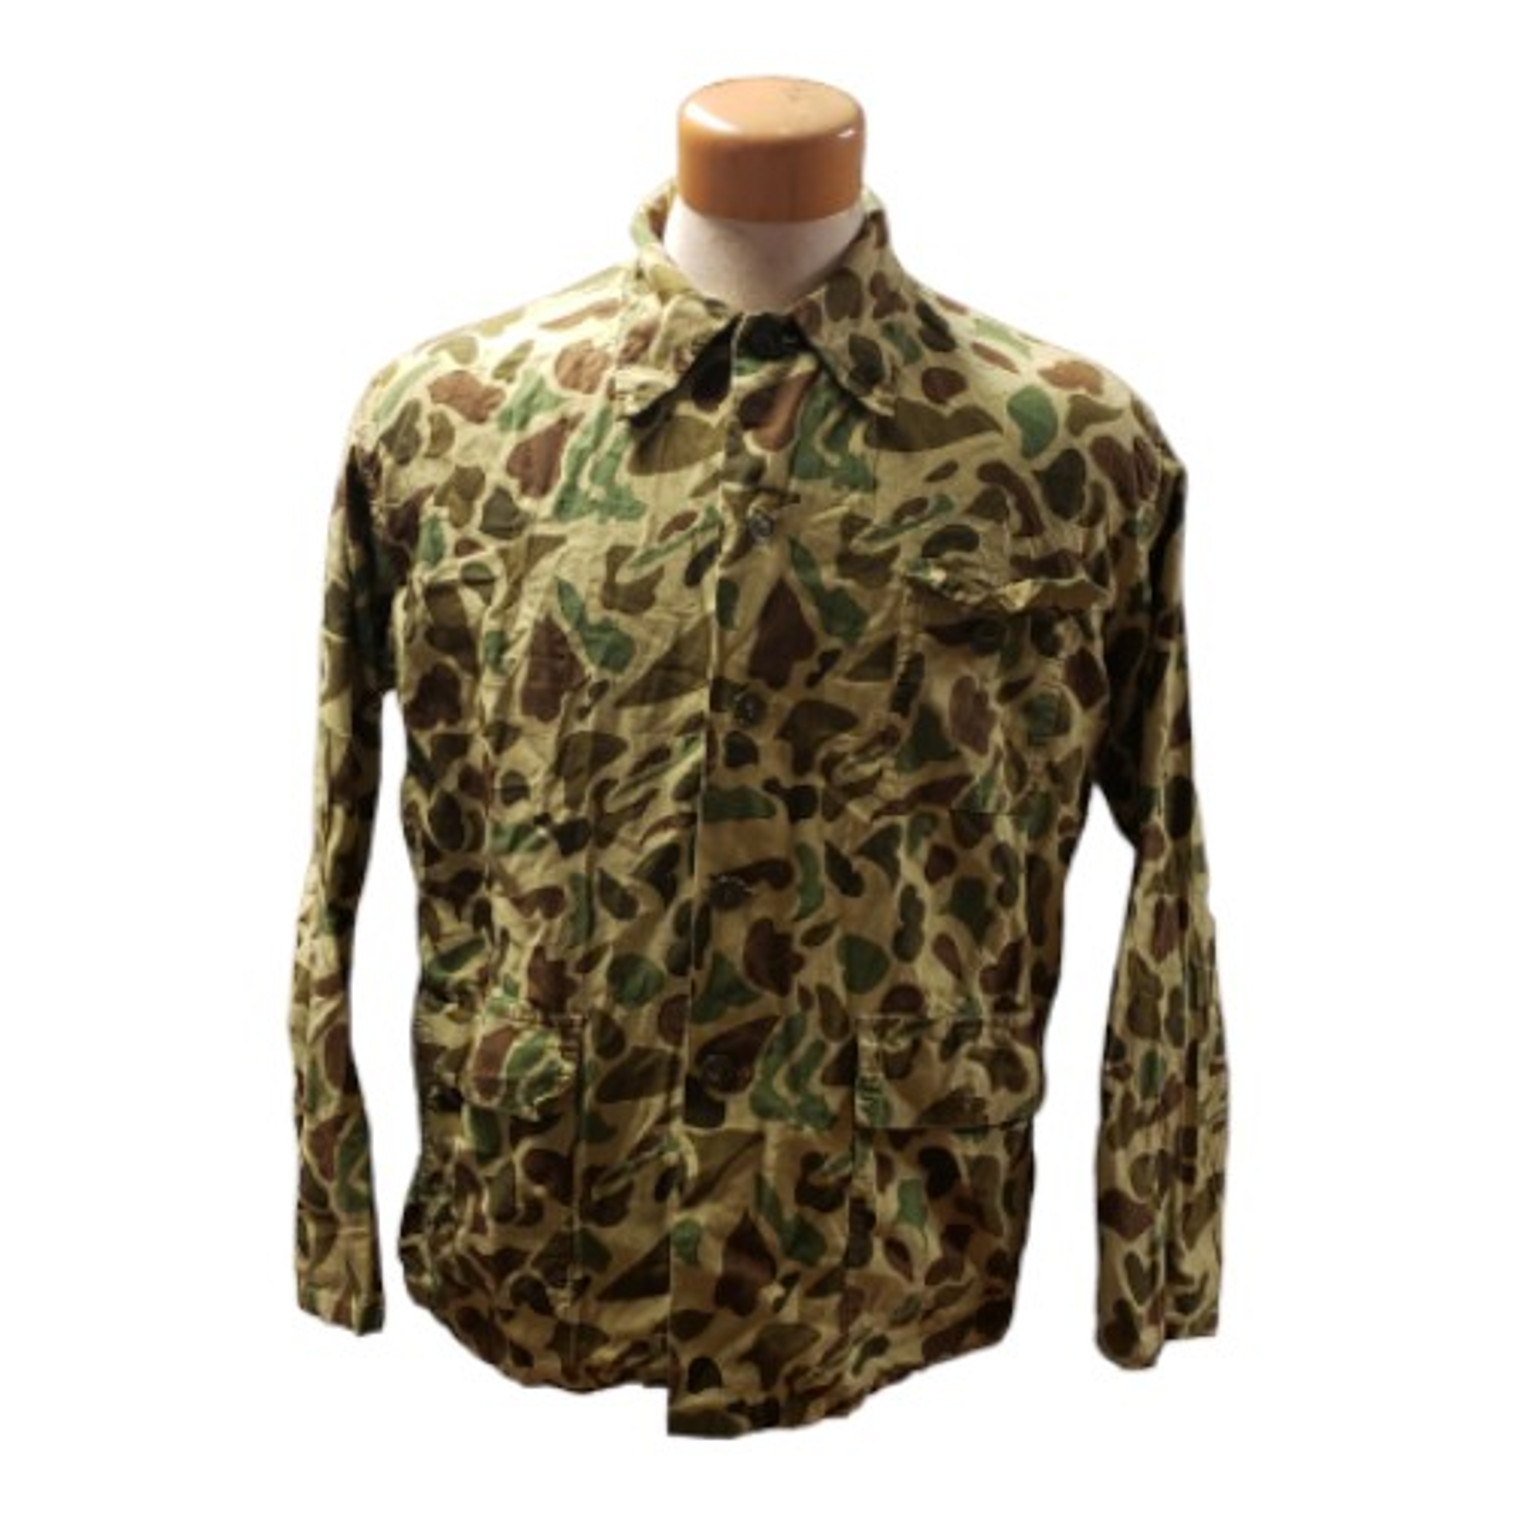 Vintage Caliber Sportman's Apparel Duck Hunting Camouflage Shirt- Size Medium